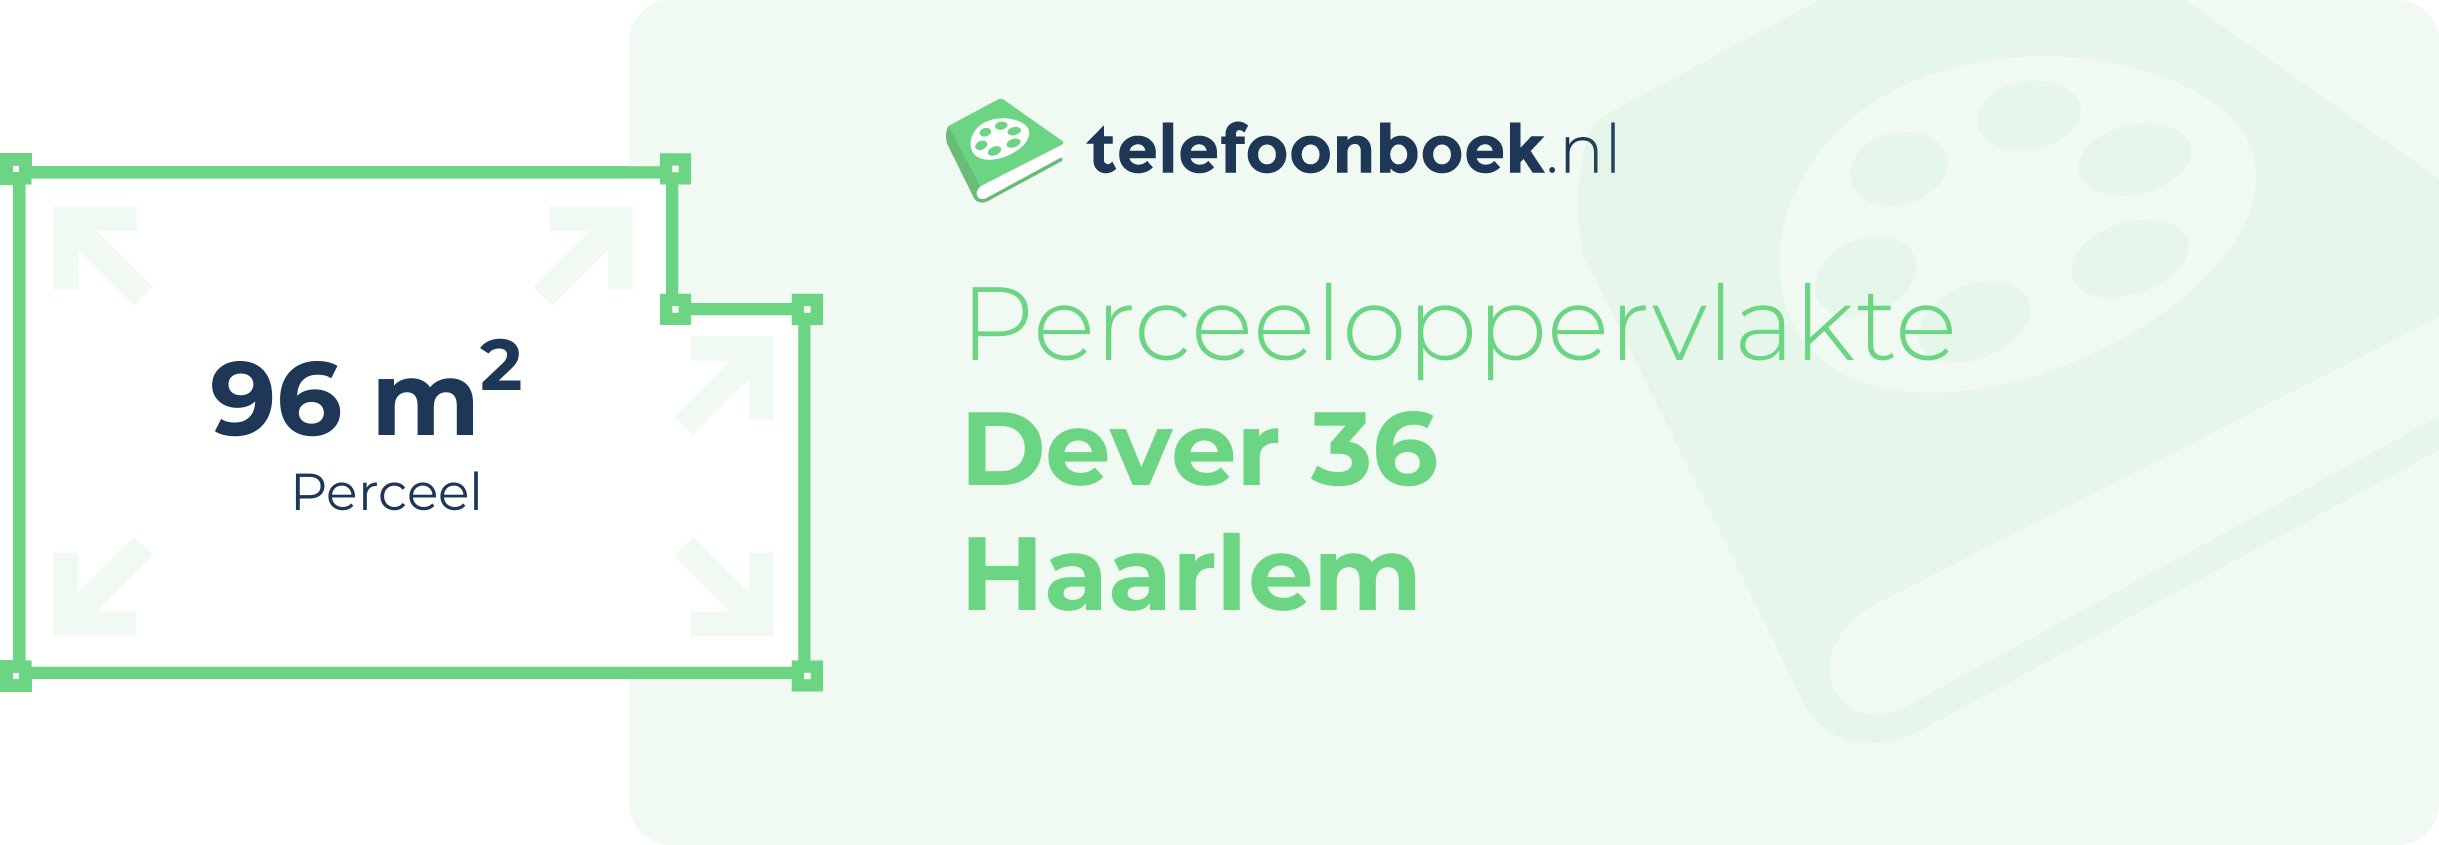 Perceeloppervlakte Dever 36 Haarlem